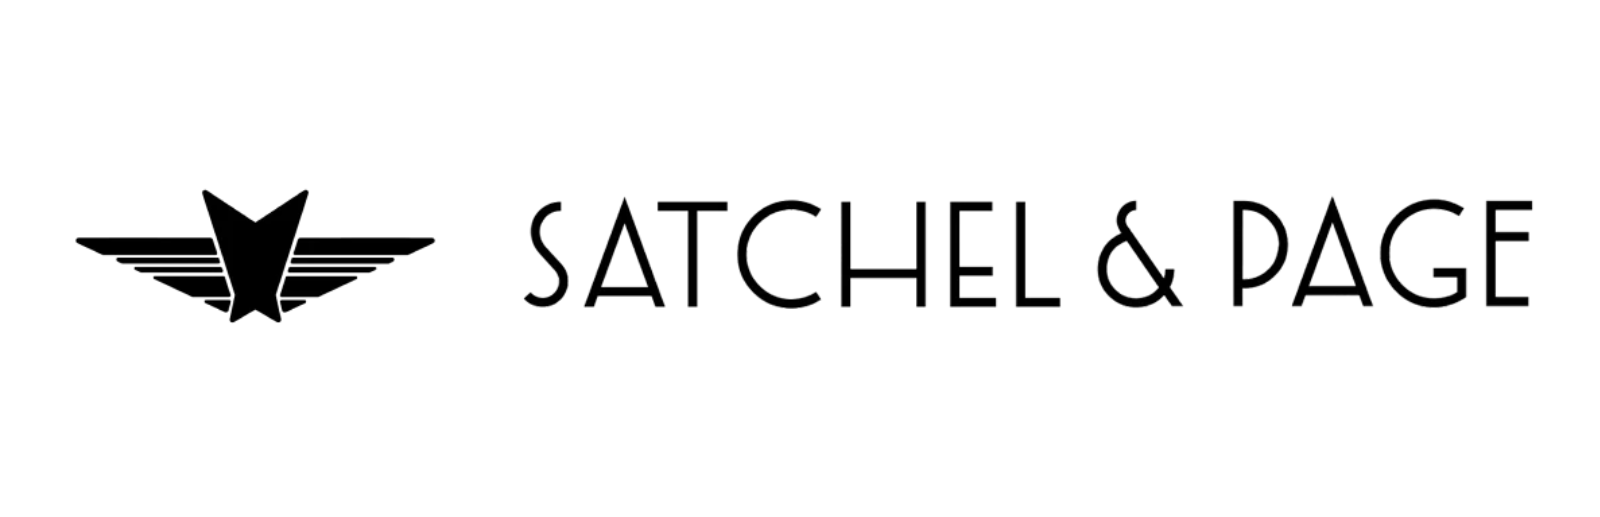 Satchel & Page Logo